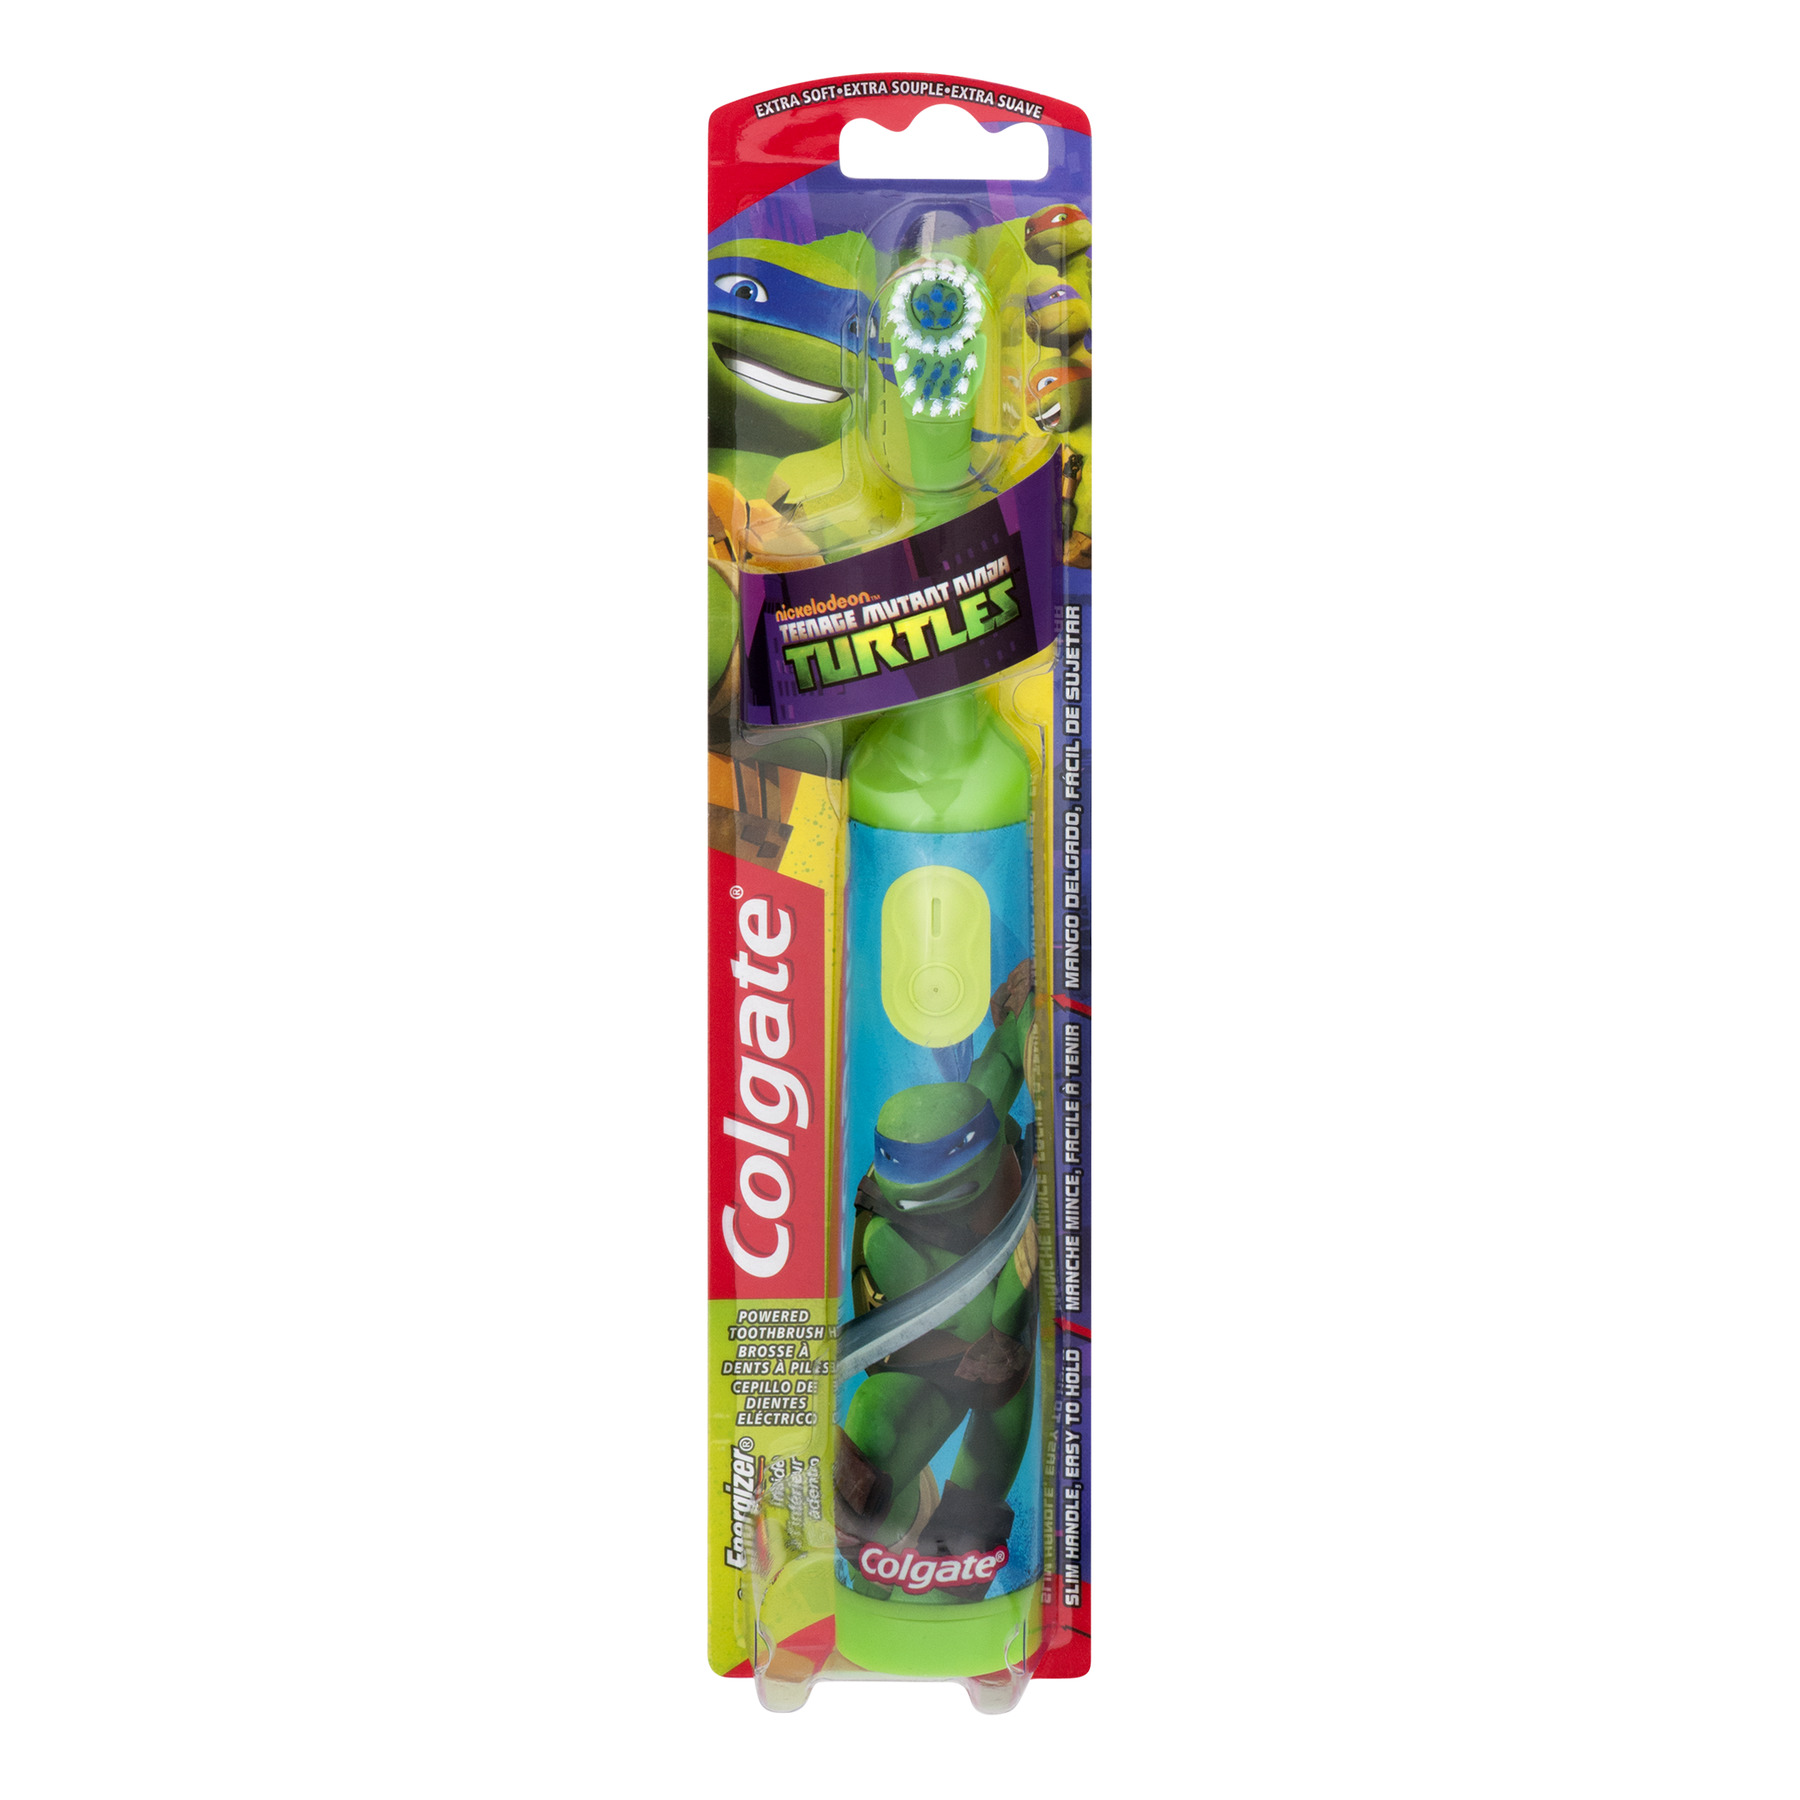 Colgate Kids Teenage Mutant Ninja Turtles Battery Electric Toothbrush - image 1 of 6